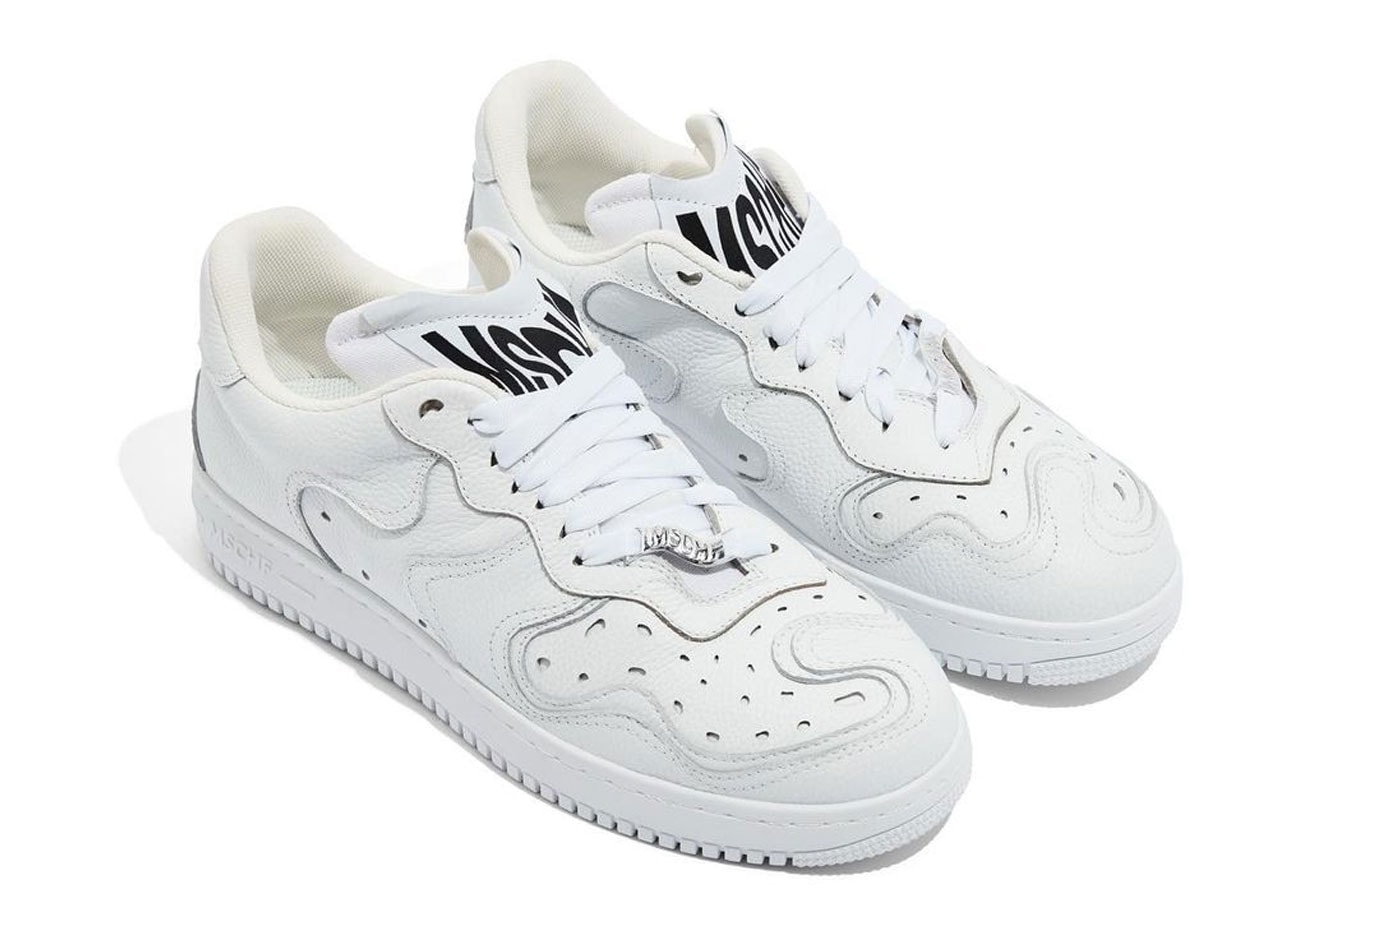 MSCHF x Tyga 'Wavy Baby' Black / White Low Top Sneakers - Sneak in